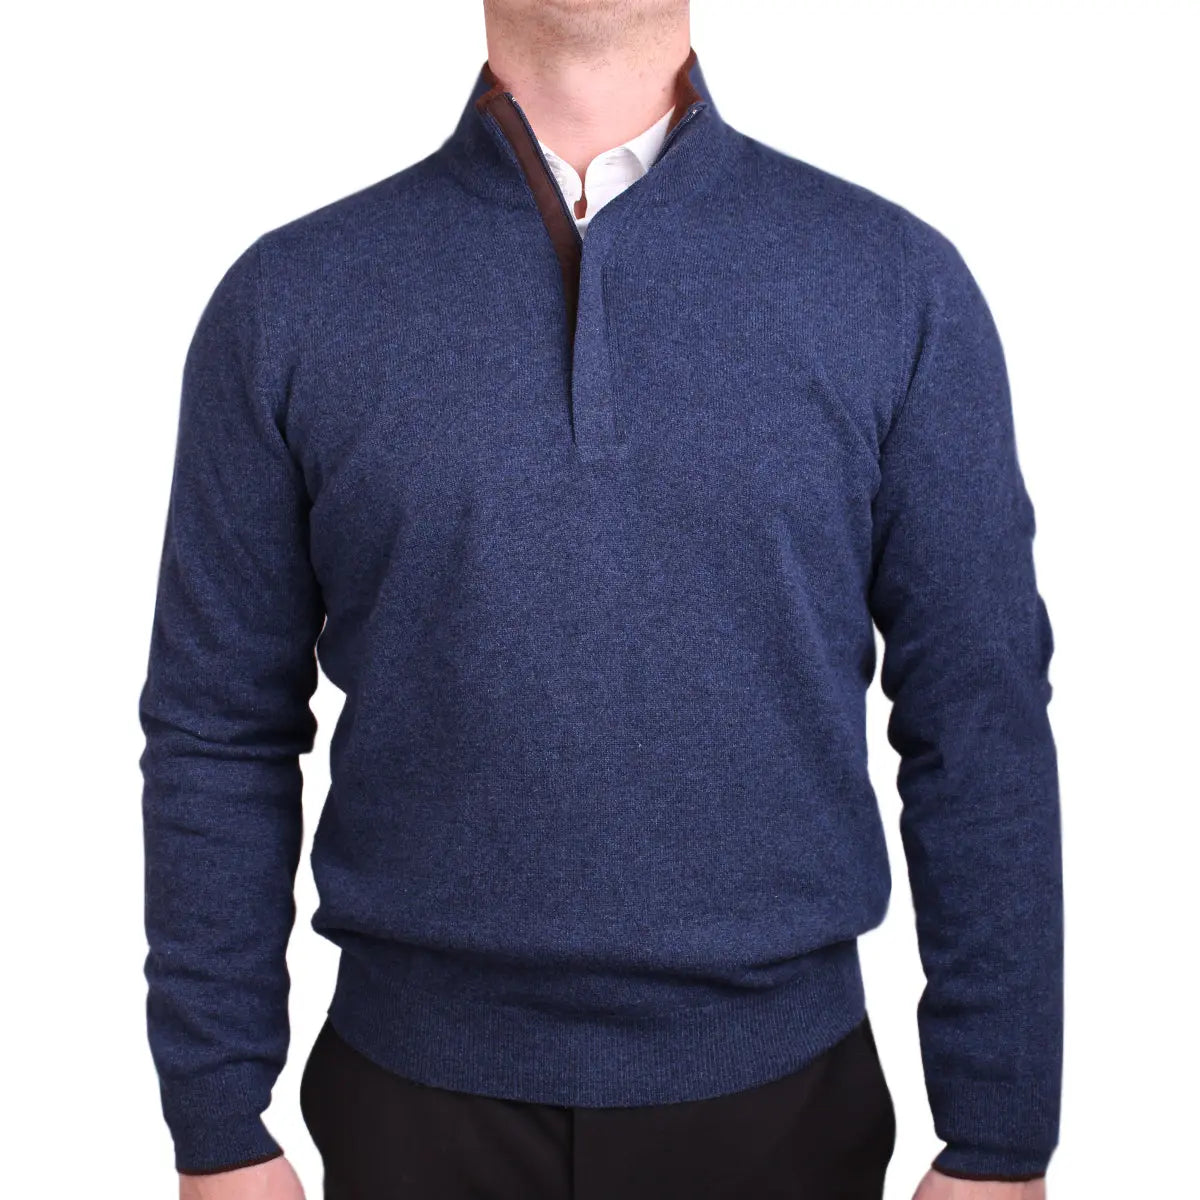 Denim Blue Wool & Cashmere Blend Zip-Neck Sweater  Robert Old   